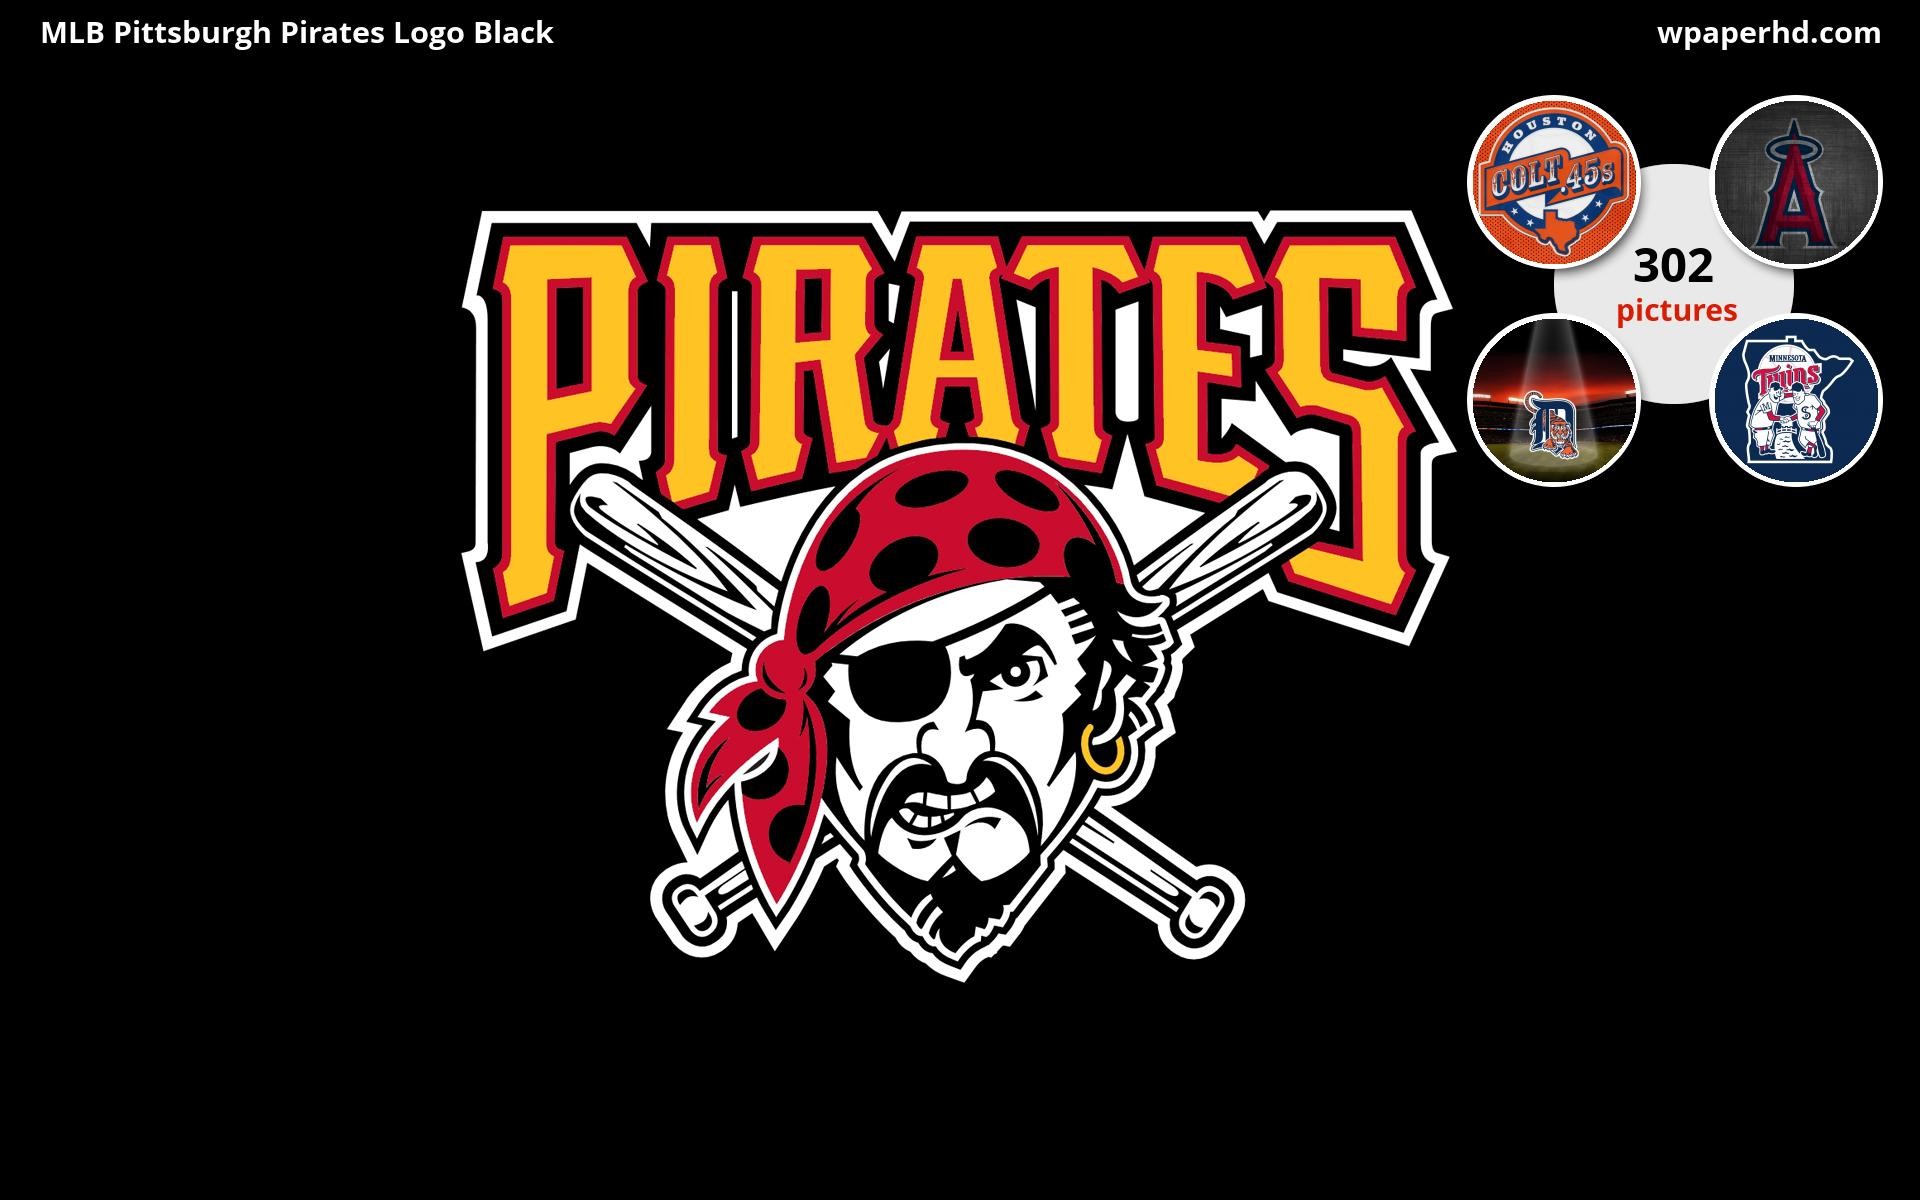 Pittsburgh Pirates Wallpaper Desktop 2018 66 images